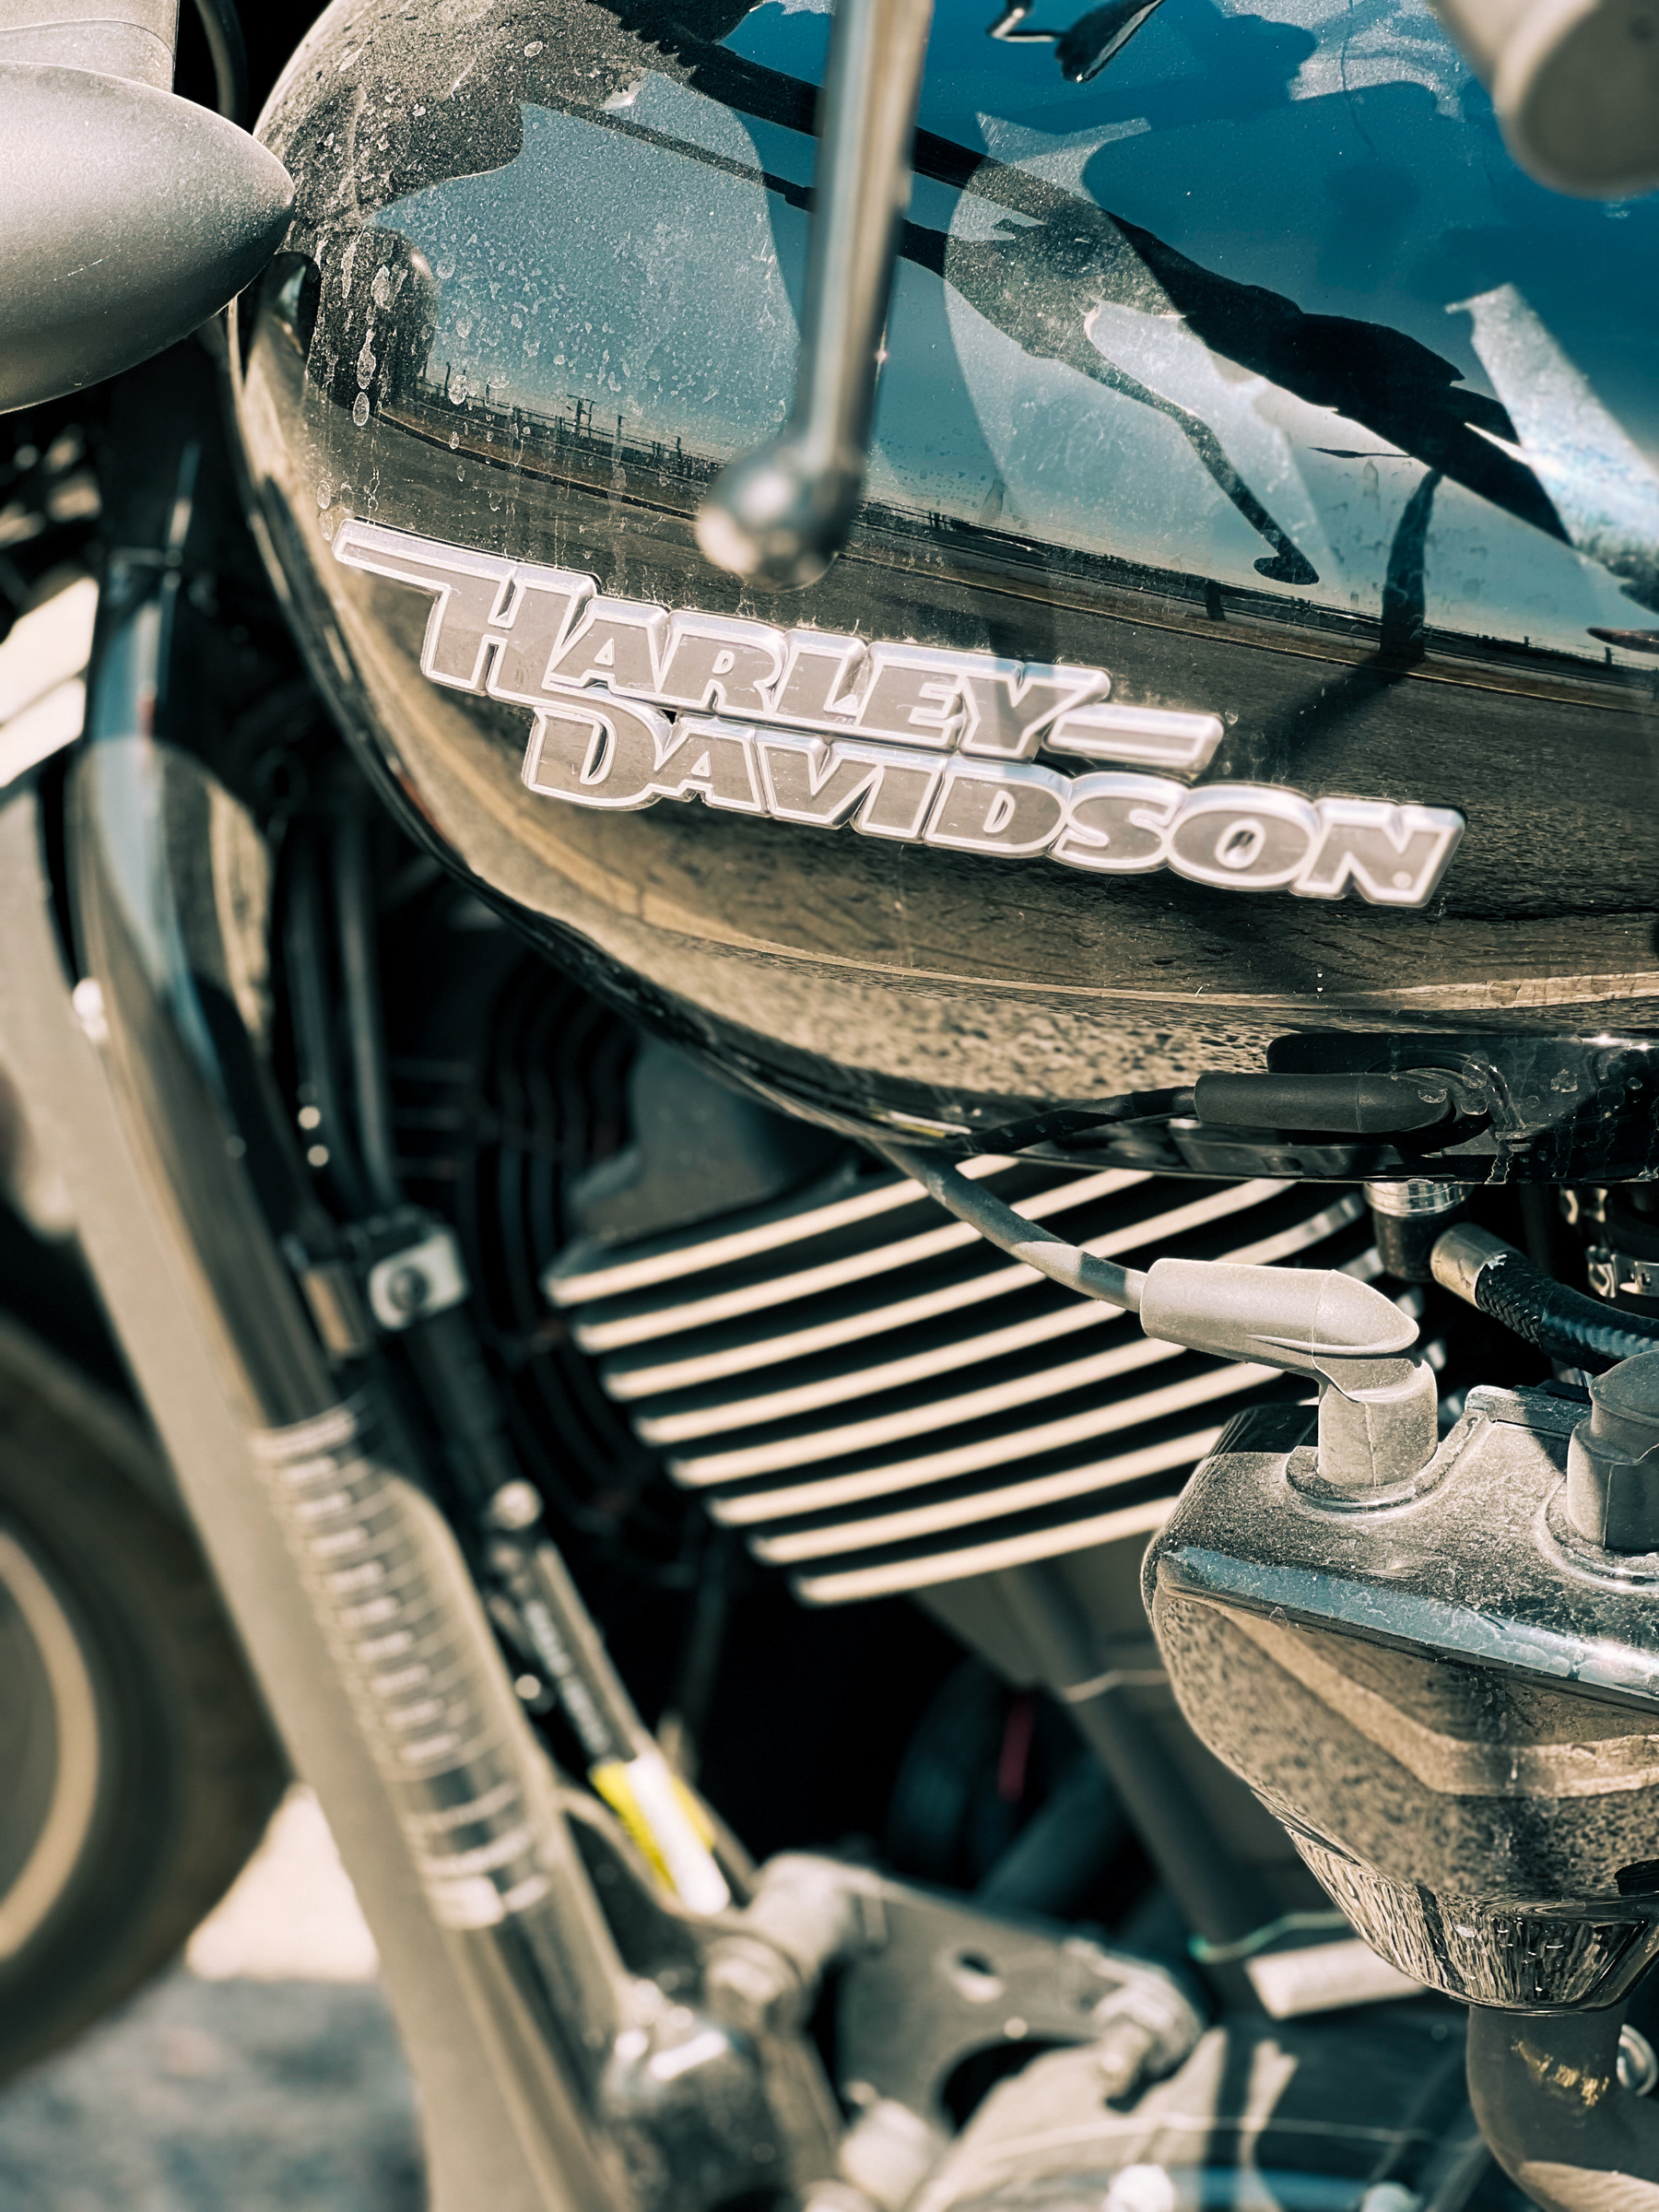 A very dirty Harley Davidson. 